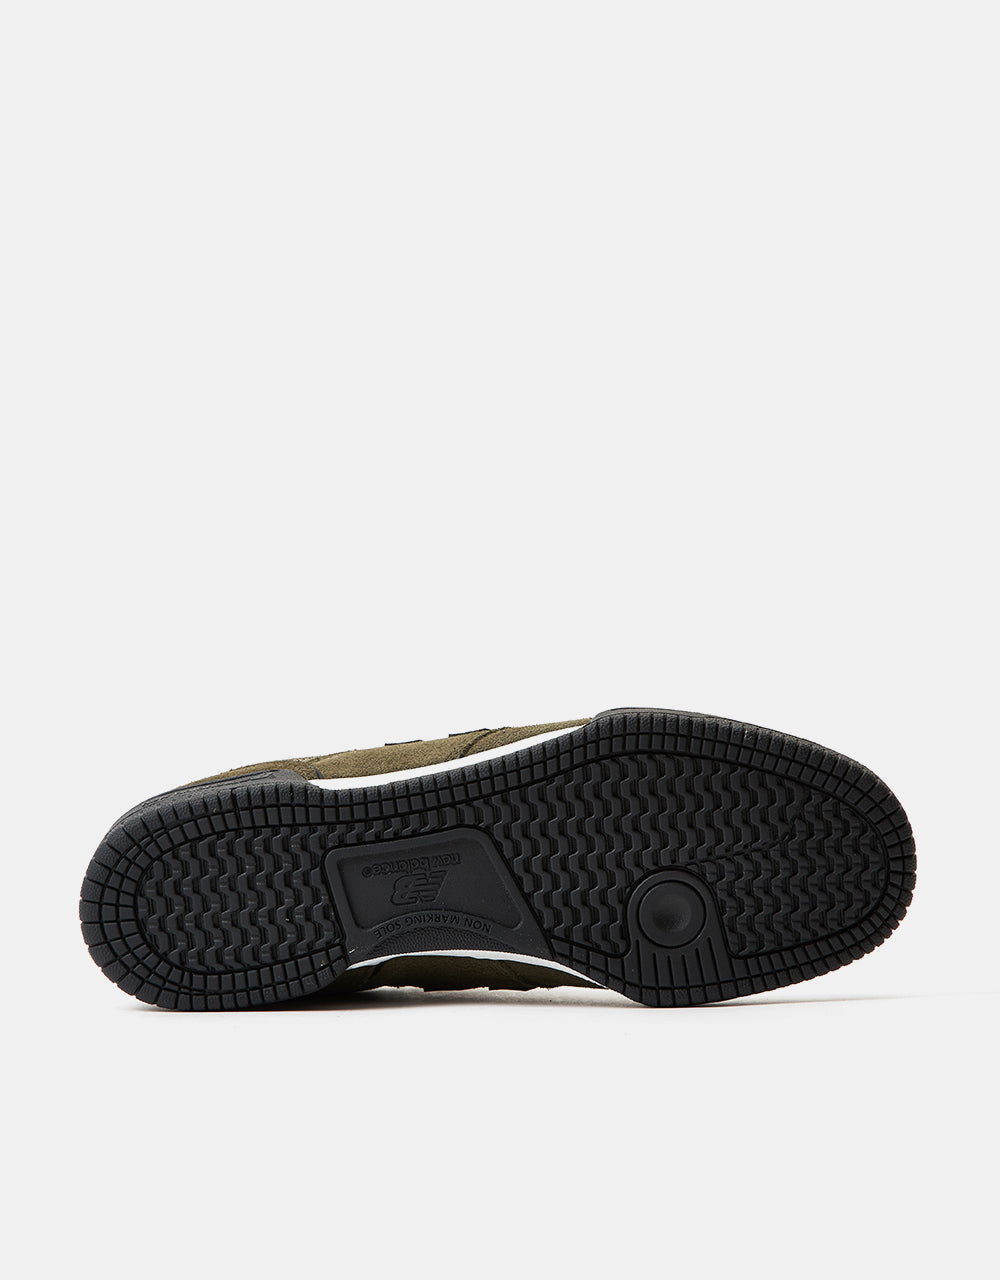 New Balance Numeric Tom Knox 600 Skate Shoes - Olive/Black